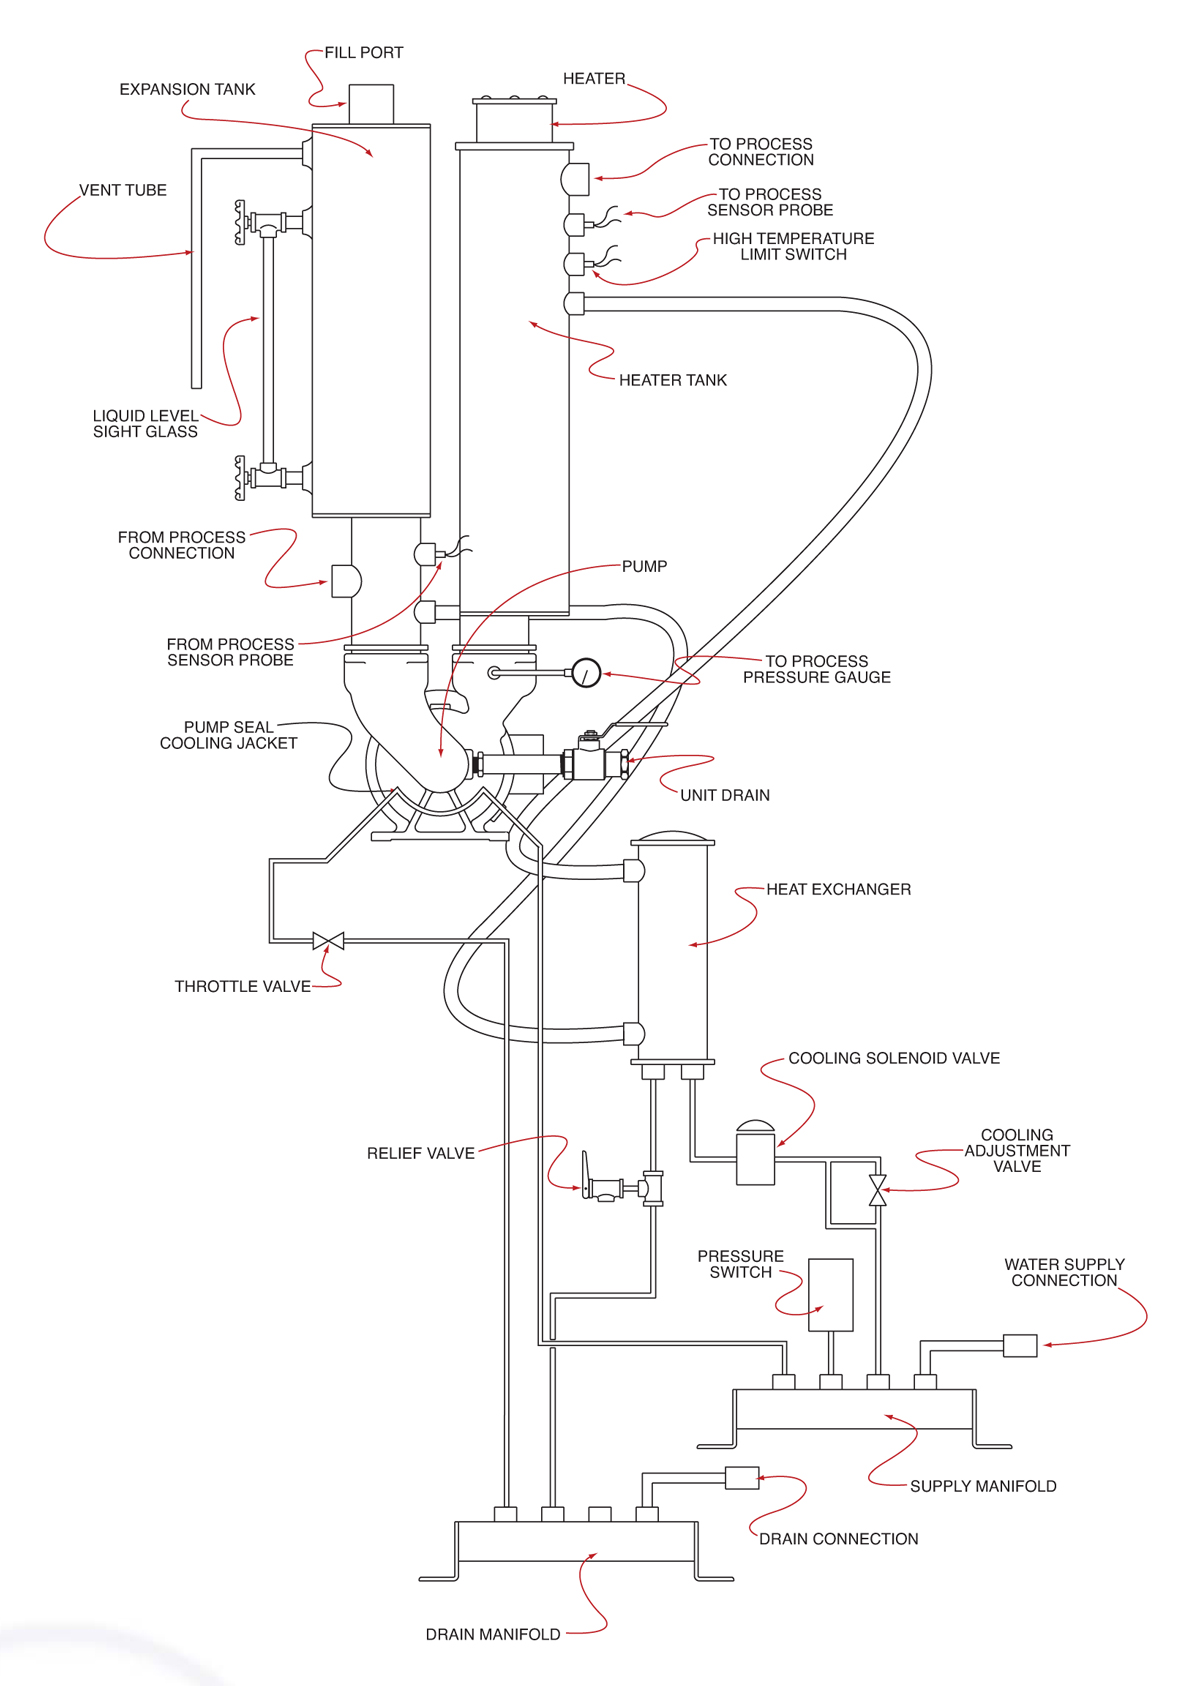 Circuit Drawing : Heating - Cooling Circuits : Regal Hot Oil Temperature Control Unit